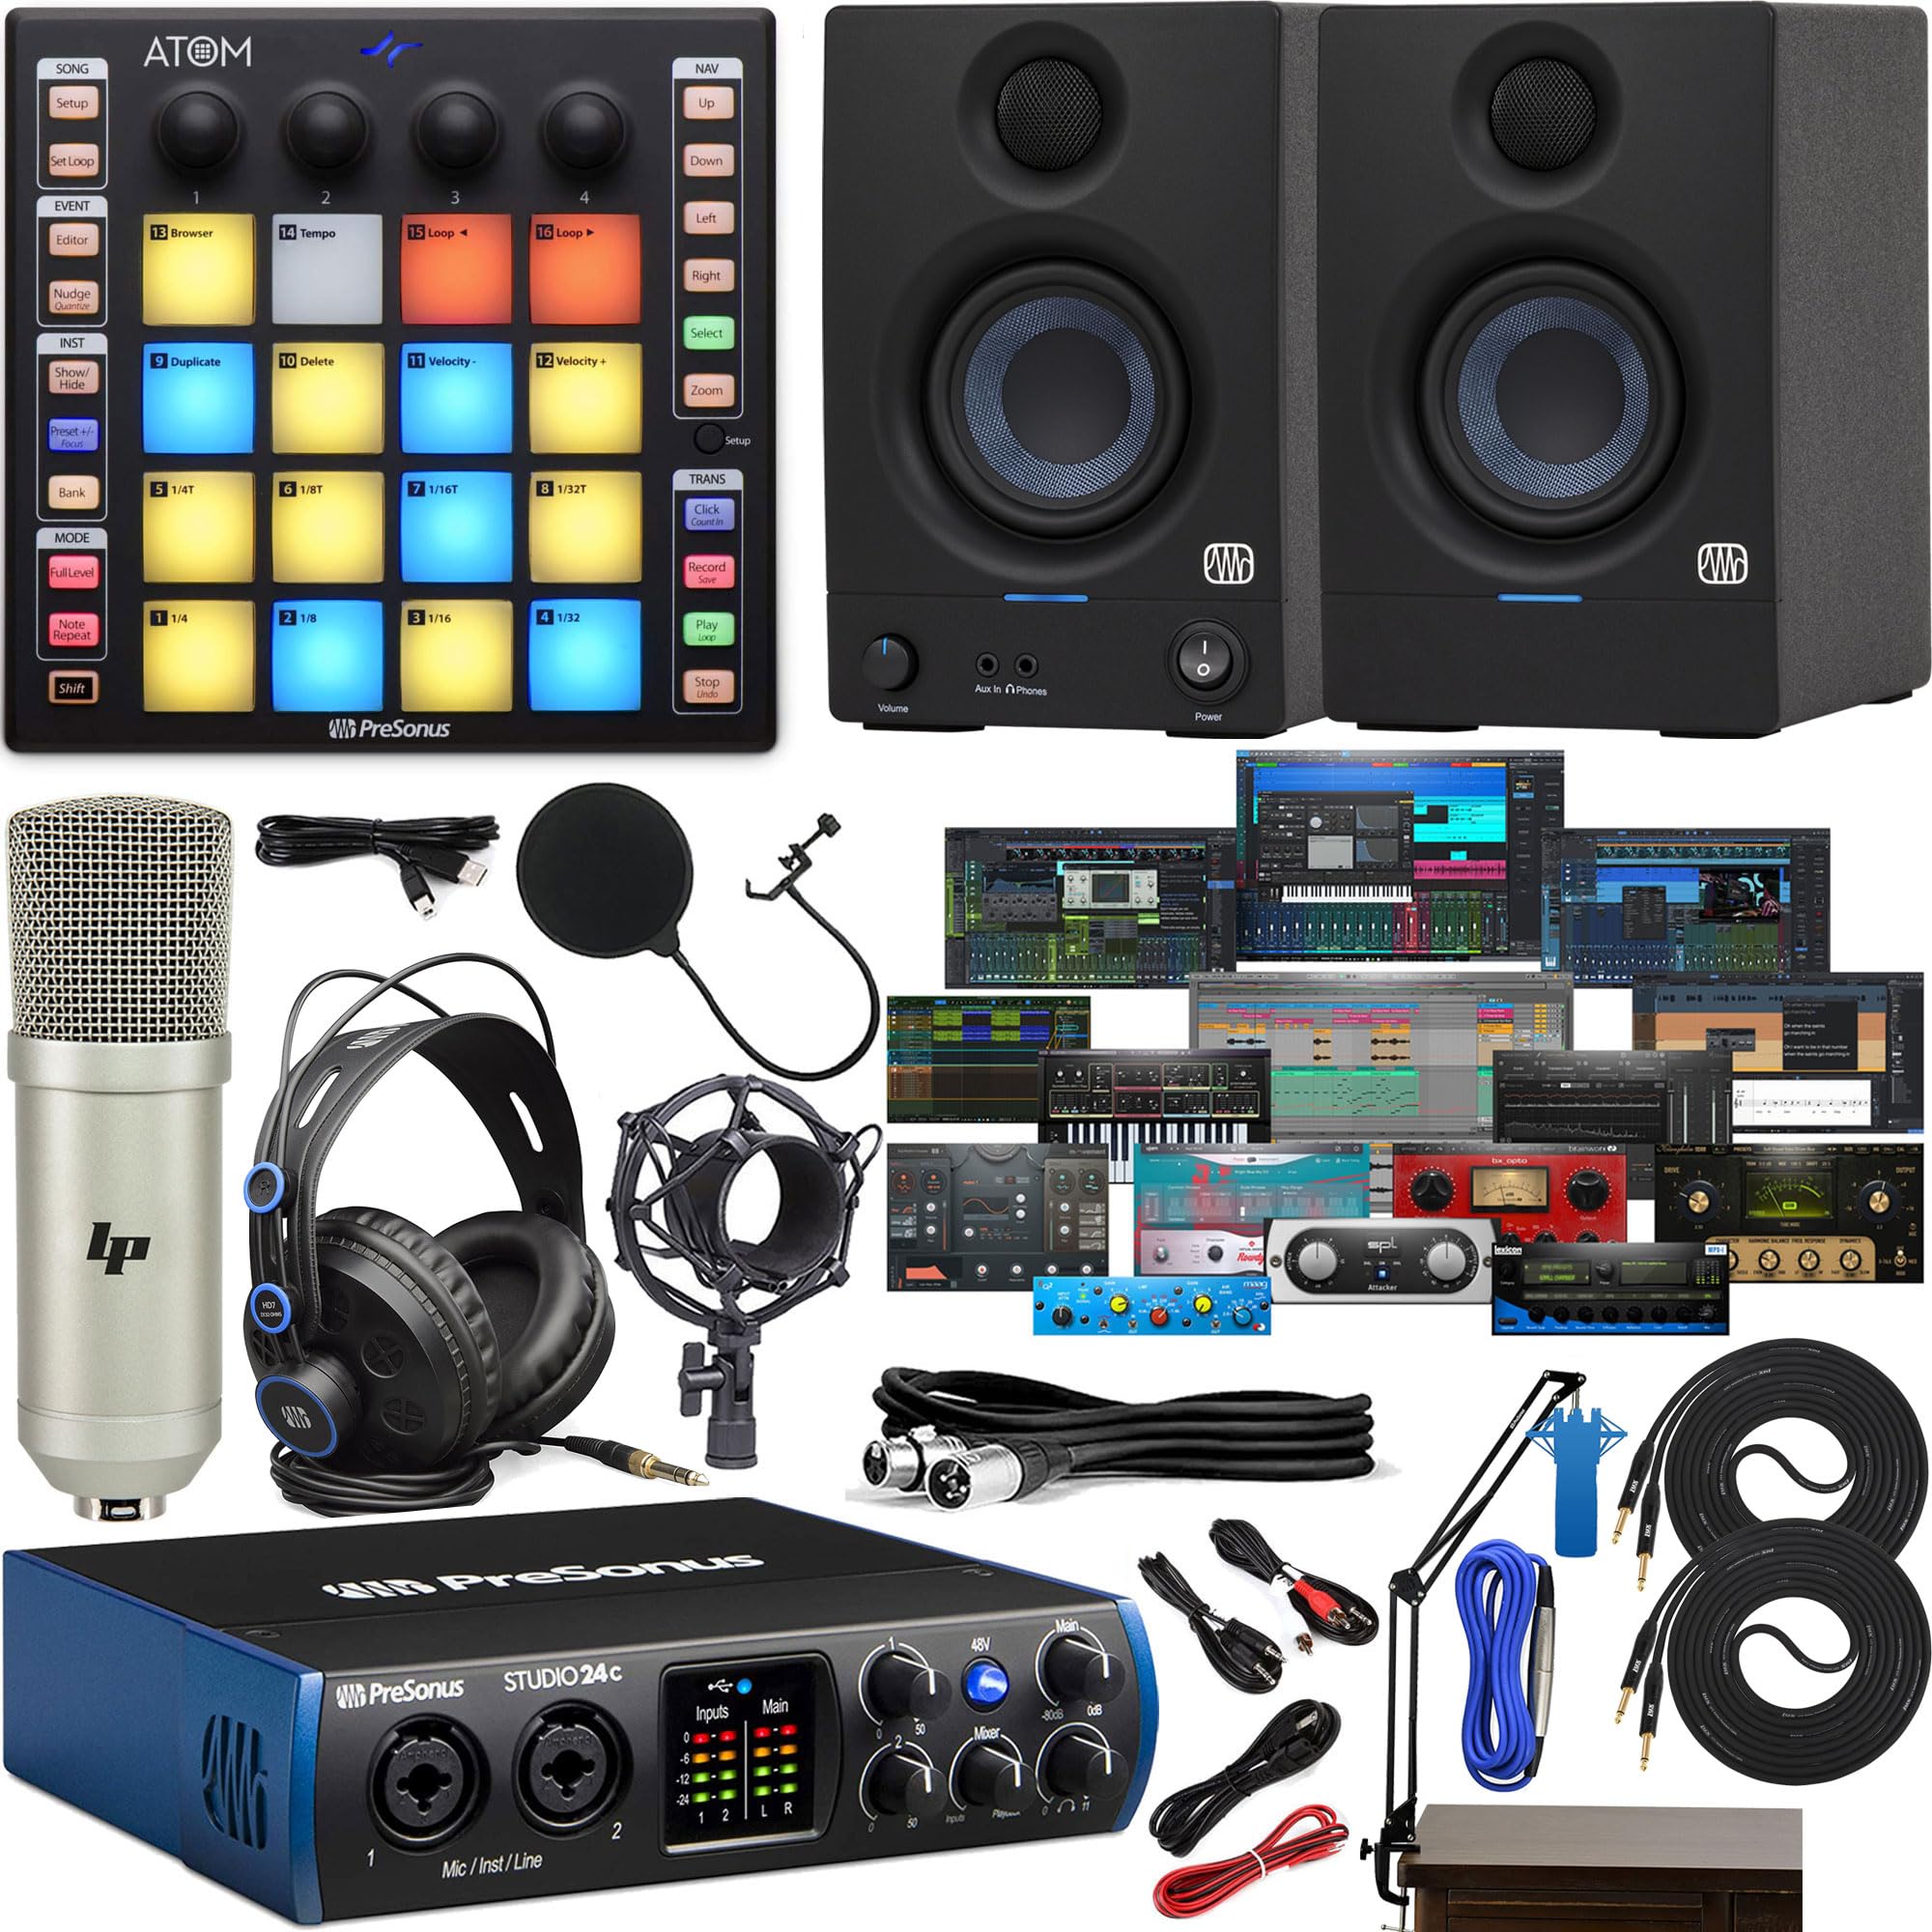 PreSonus Studio 24c 2x2 Audio/MIDI Interface with New Designed Eris 3.5 Studio Monitors and Newest Version Software Pack, ATOM MIDI Pad Controller and Adjustable Suspension Boom Arm + HD7 Headphones